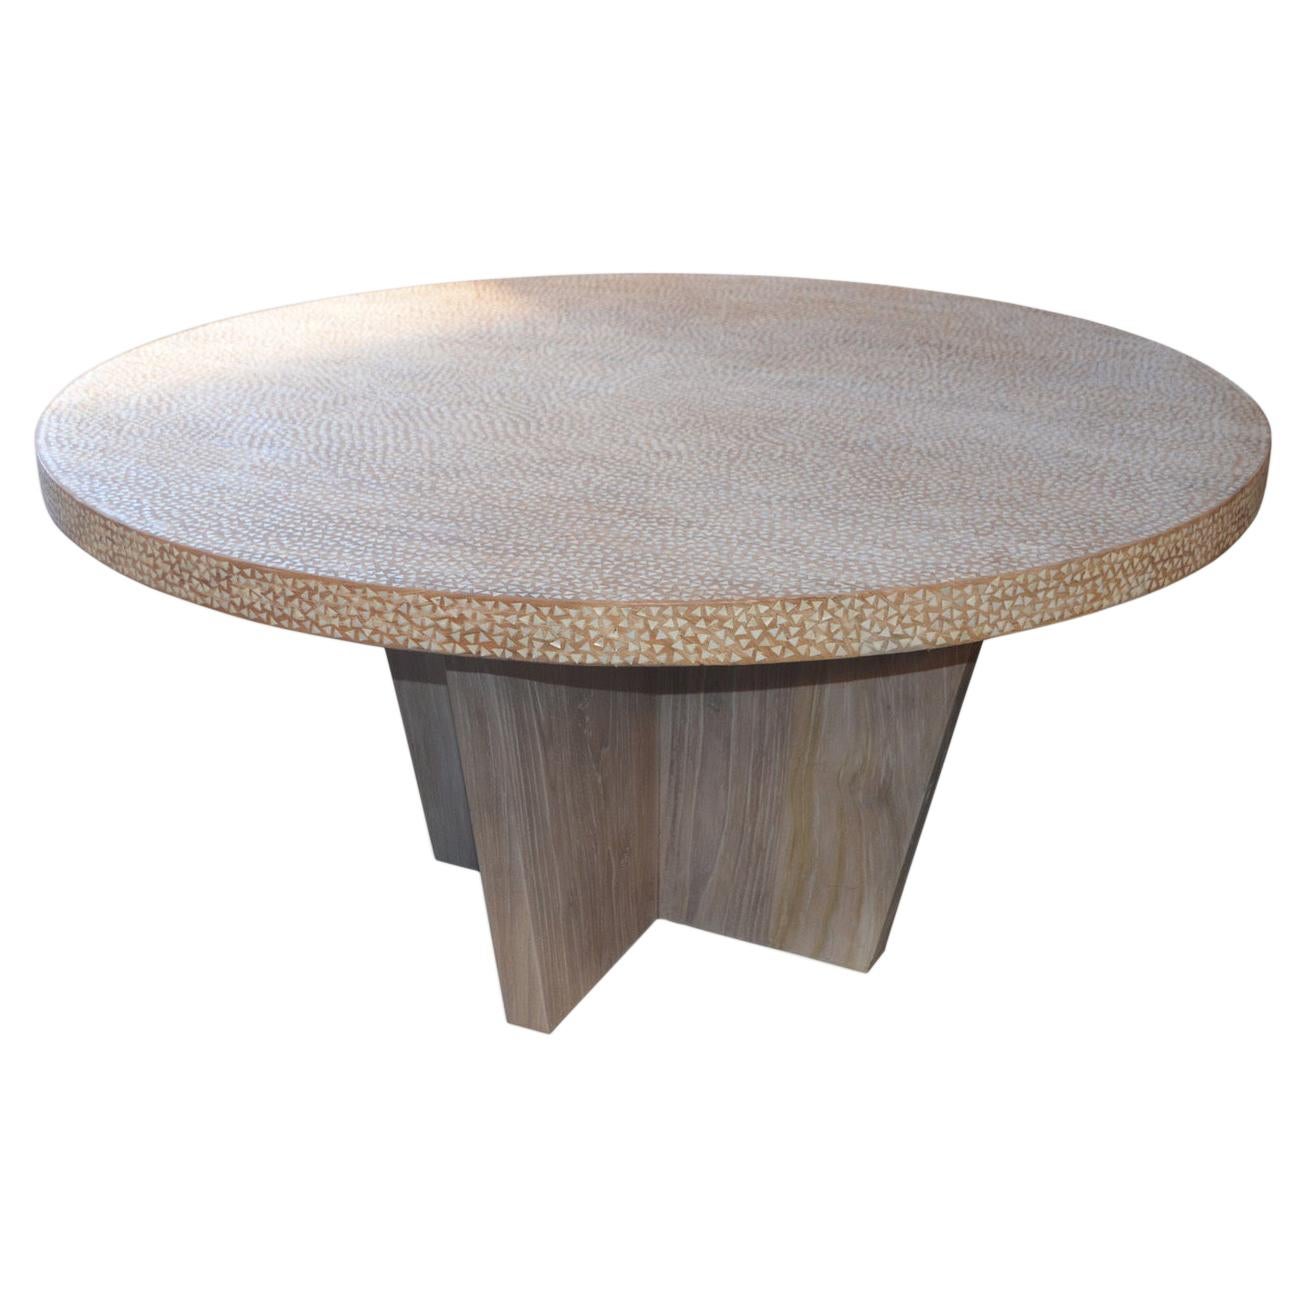 Andrianna Shamaris Impressive Shell Inlay Teak Wood Dining Table